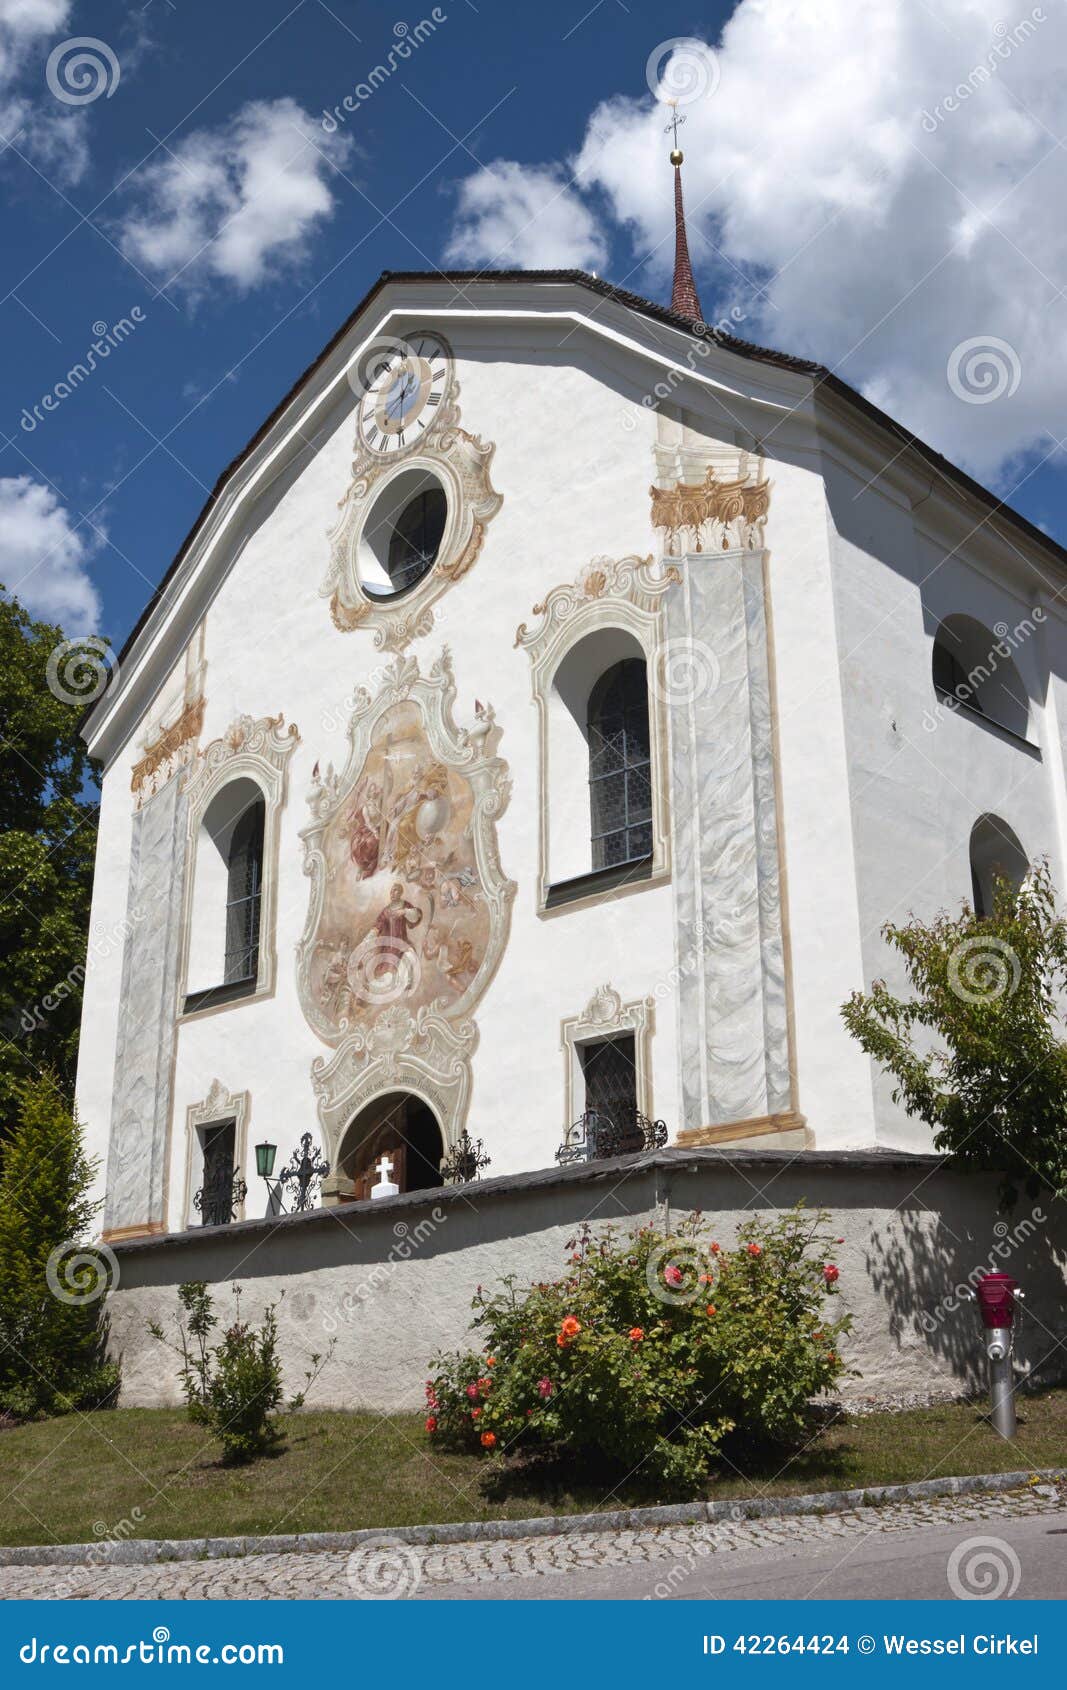 parish church of anras castle, anras, austria